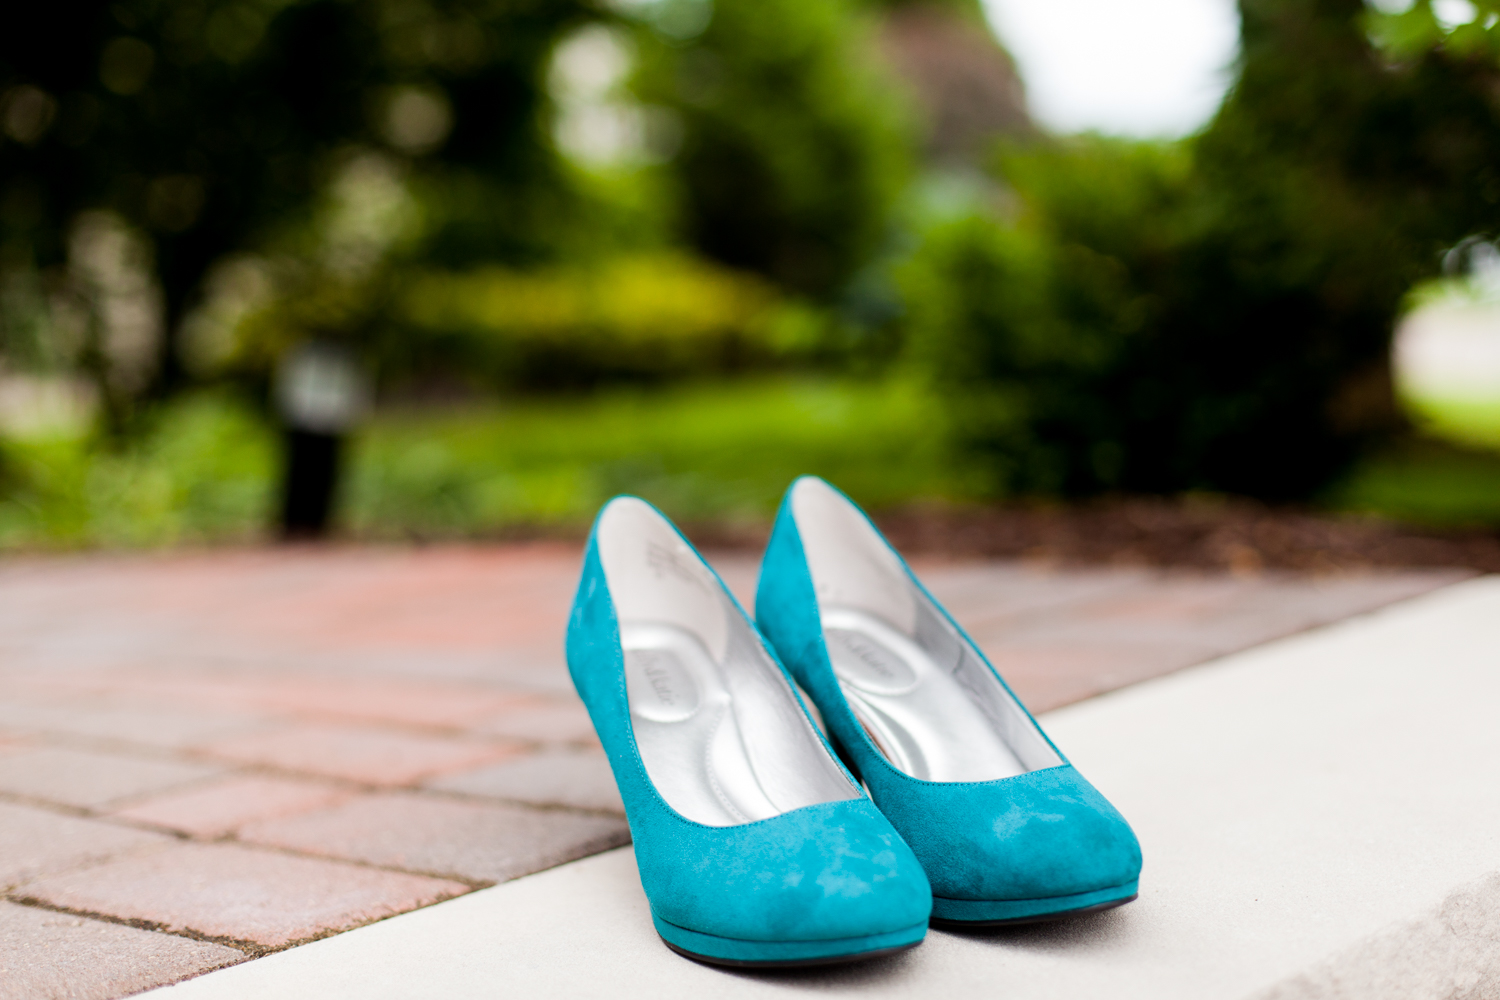  Teal bride shoes 